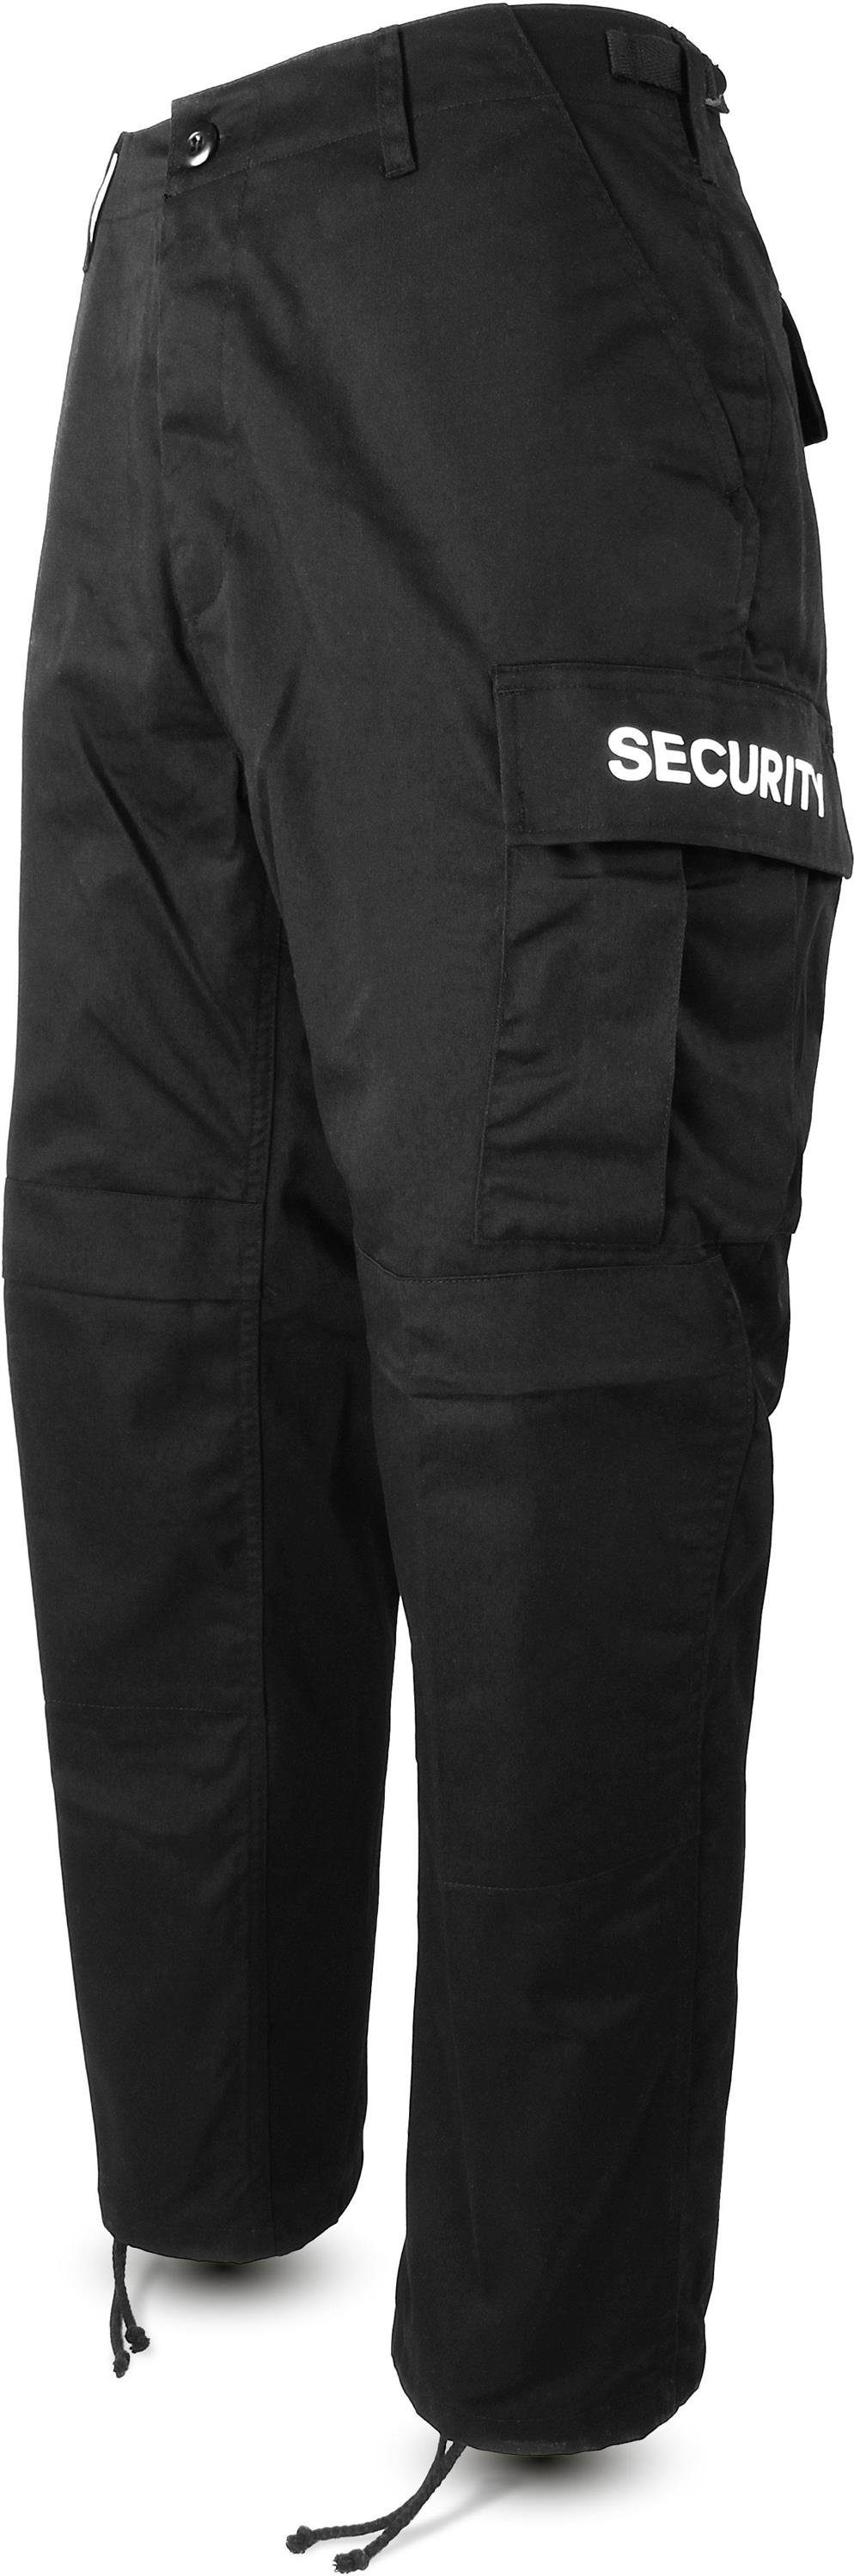 normani Outdoorhose »Herren Rangerhose SECURITY« Security Hose Feldhose  Arbeitshose mit Schirftzug beidseitig